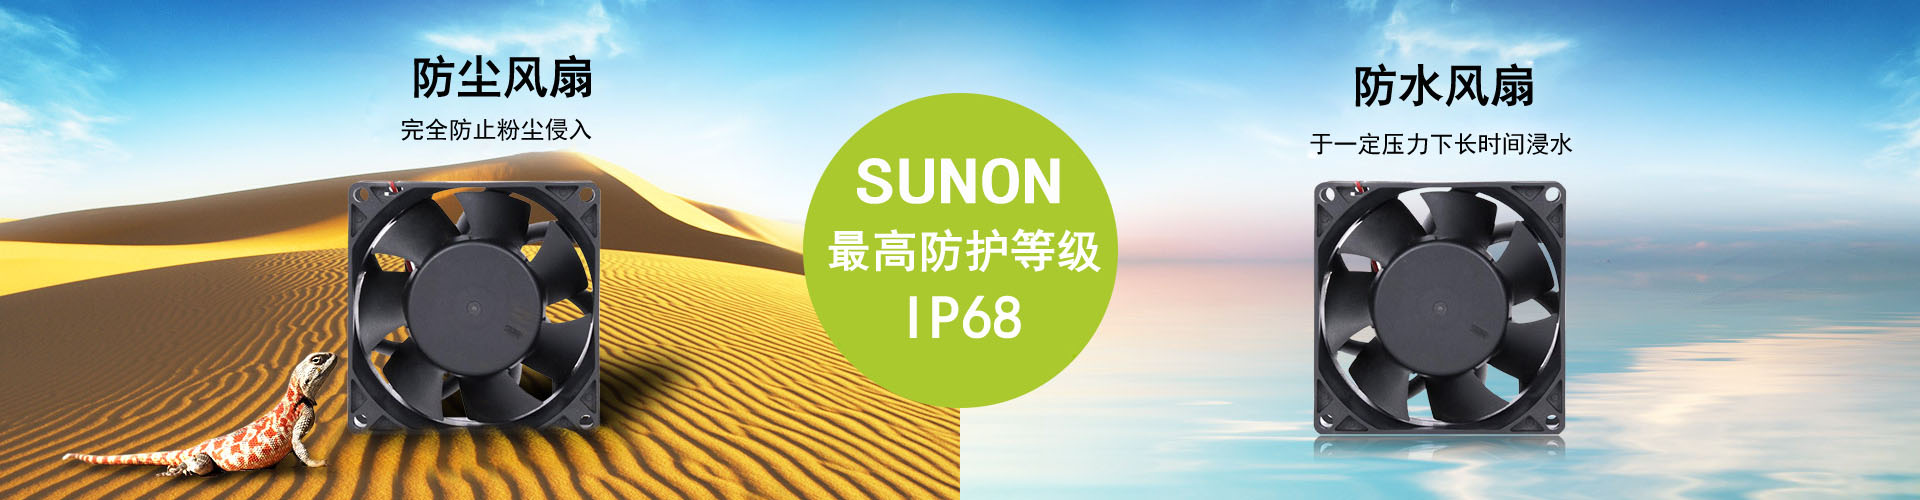 banner1-SUNON，SUNON风扇，SUNON风机，建准风扇，建准风机，建准SUNON授权代理商--武汉新瑞科电气技术有限公司